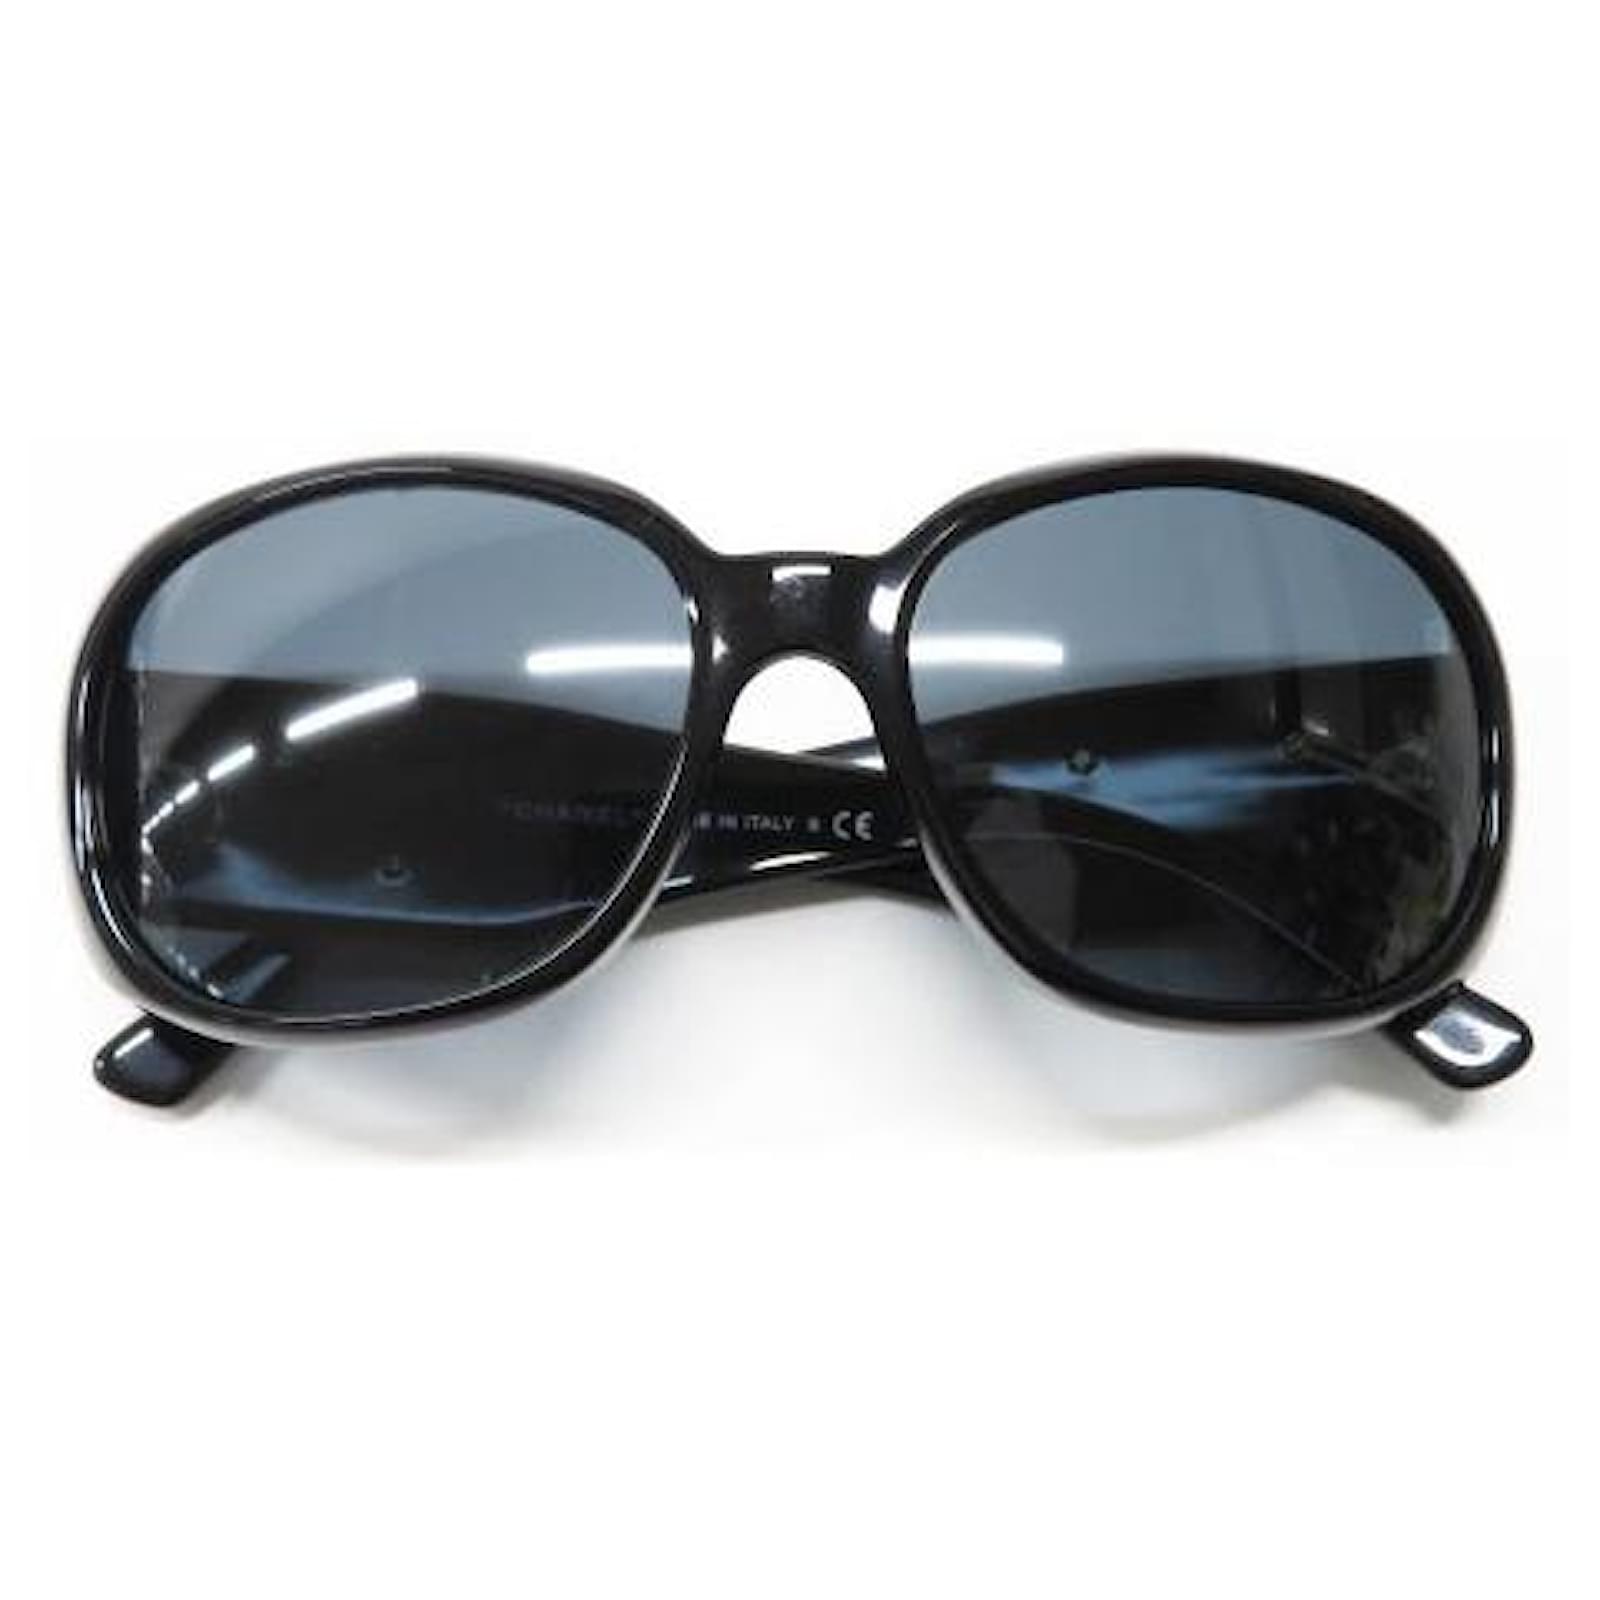 chanel polarized sunglasses women